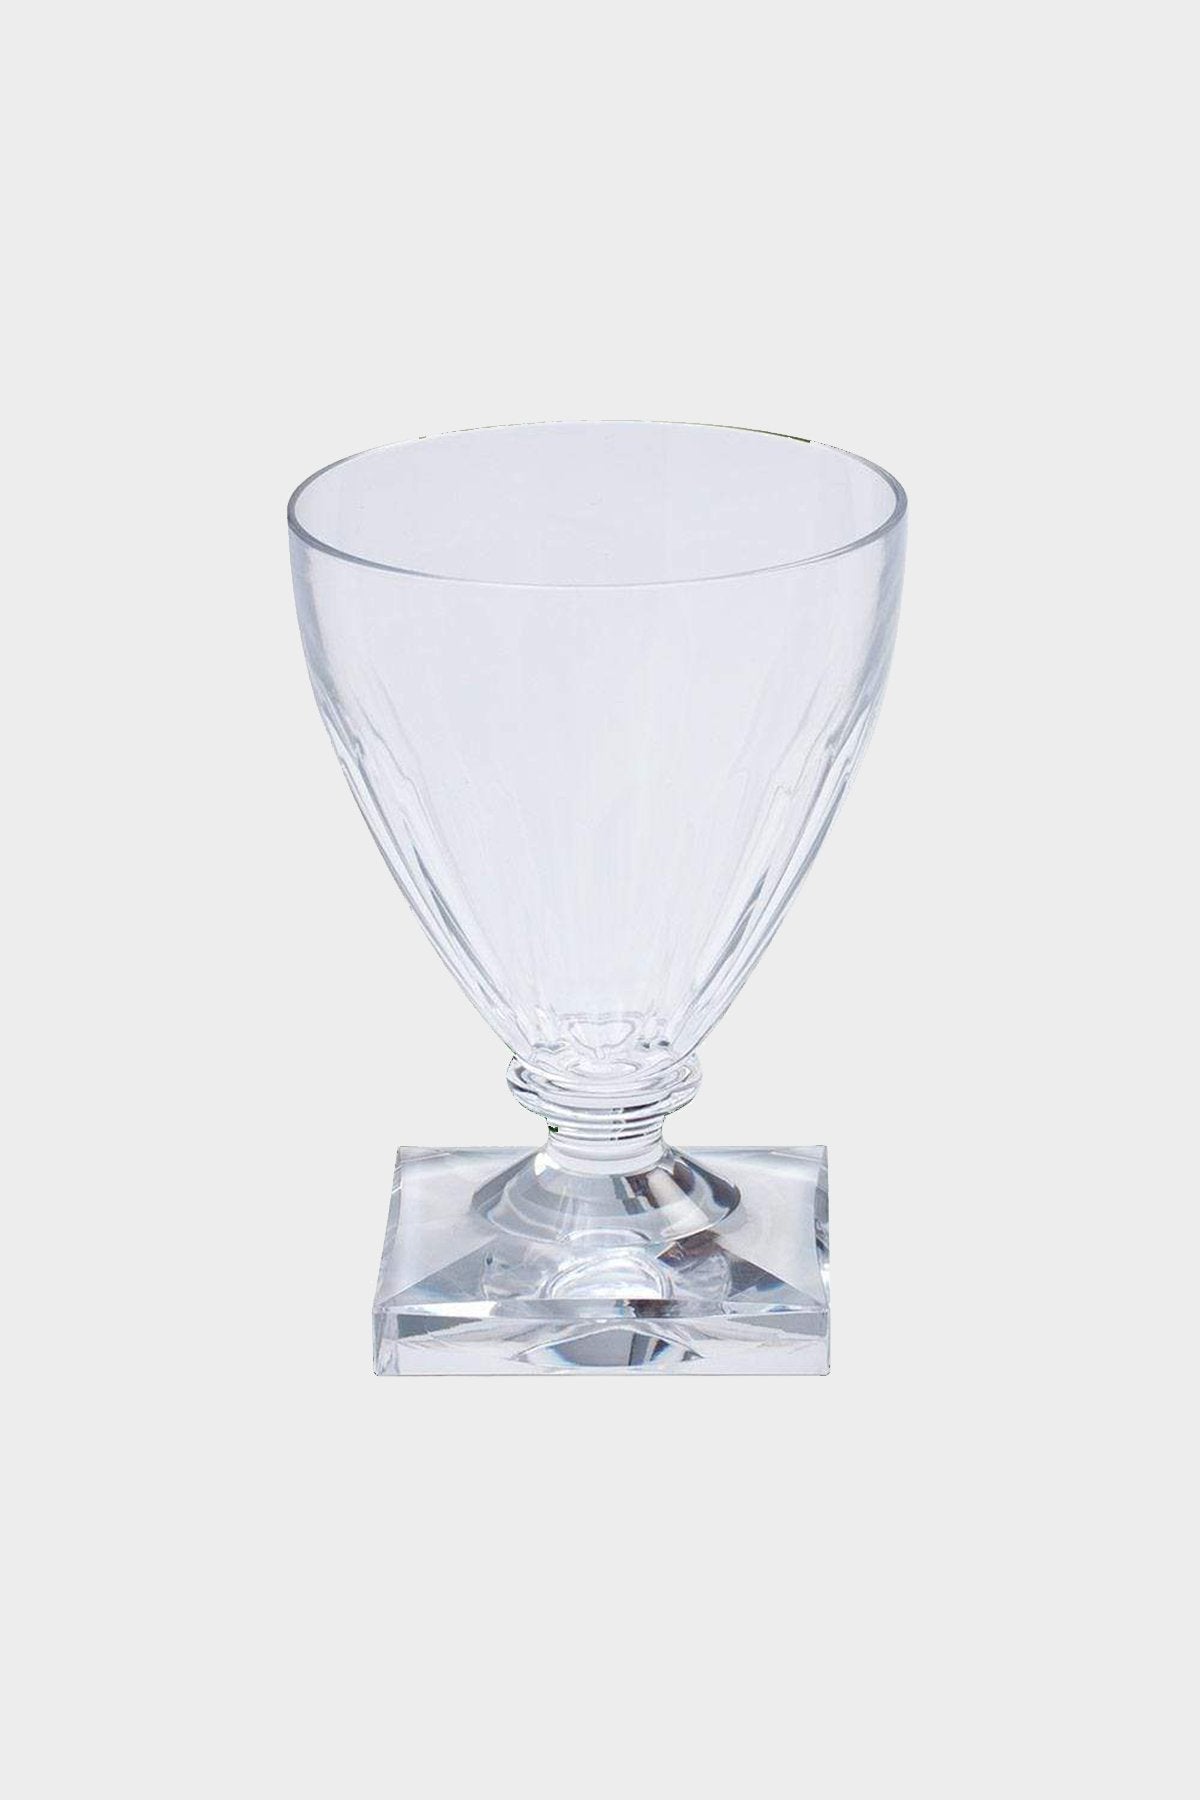 Acrylic 8.5oz Wine Goblet in Crystal Clear - shop-olivia.com